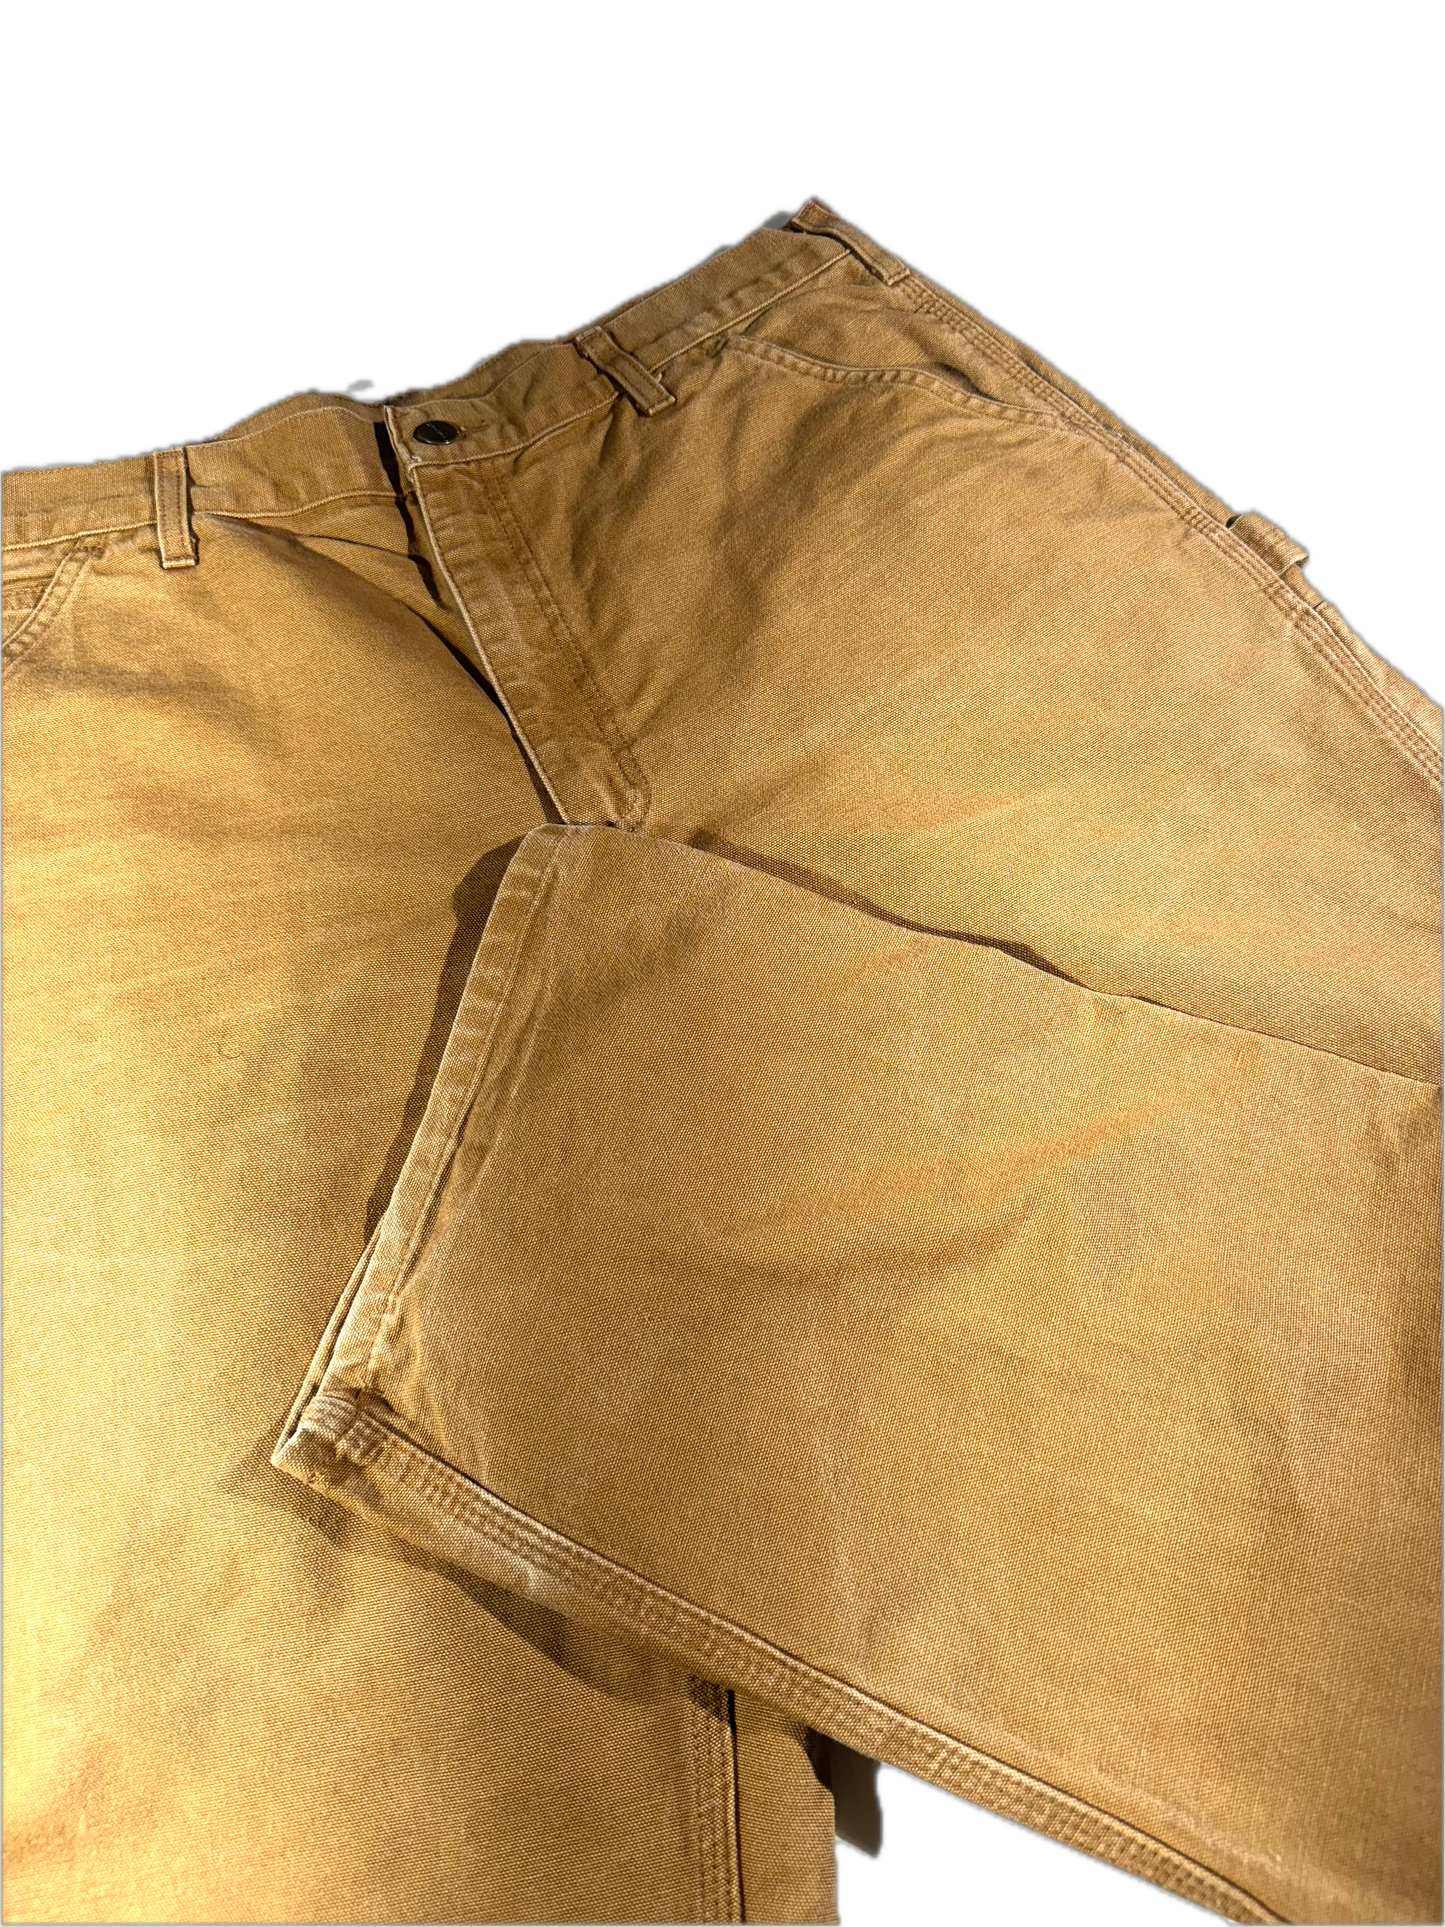 Vintage Carhartt Pants Workwear